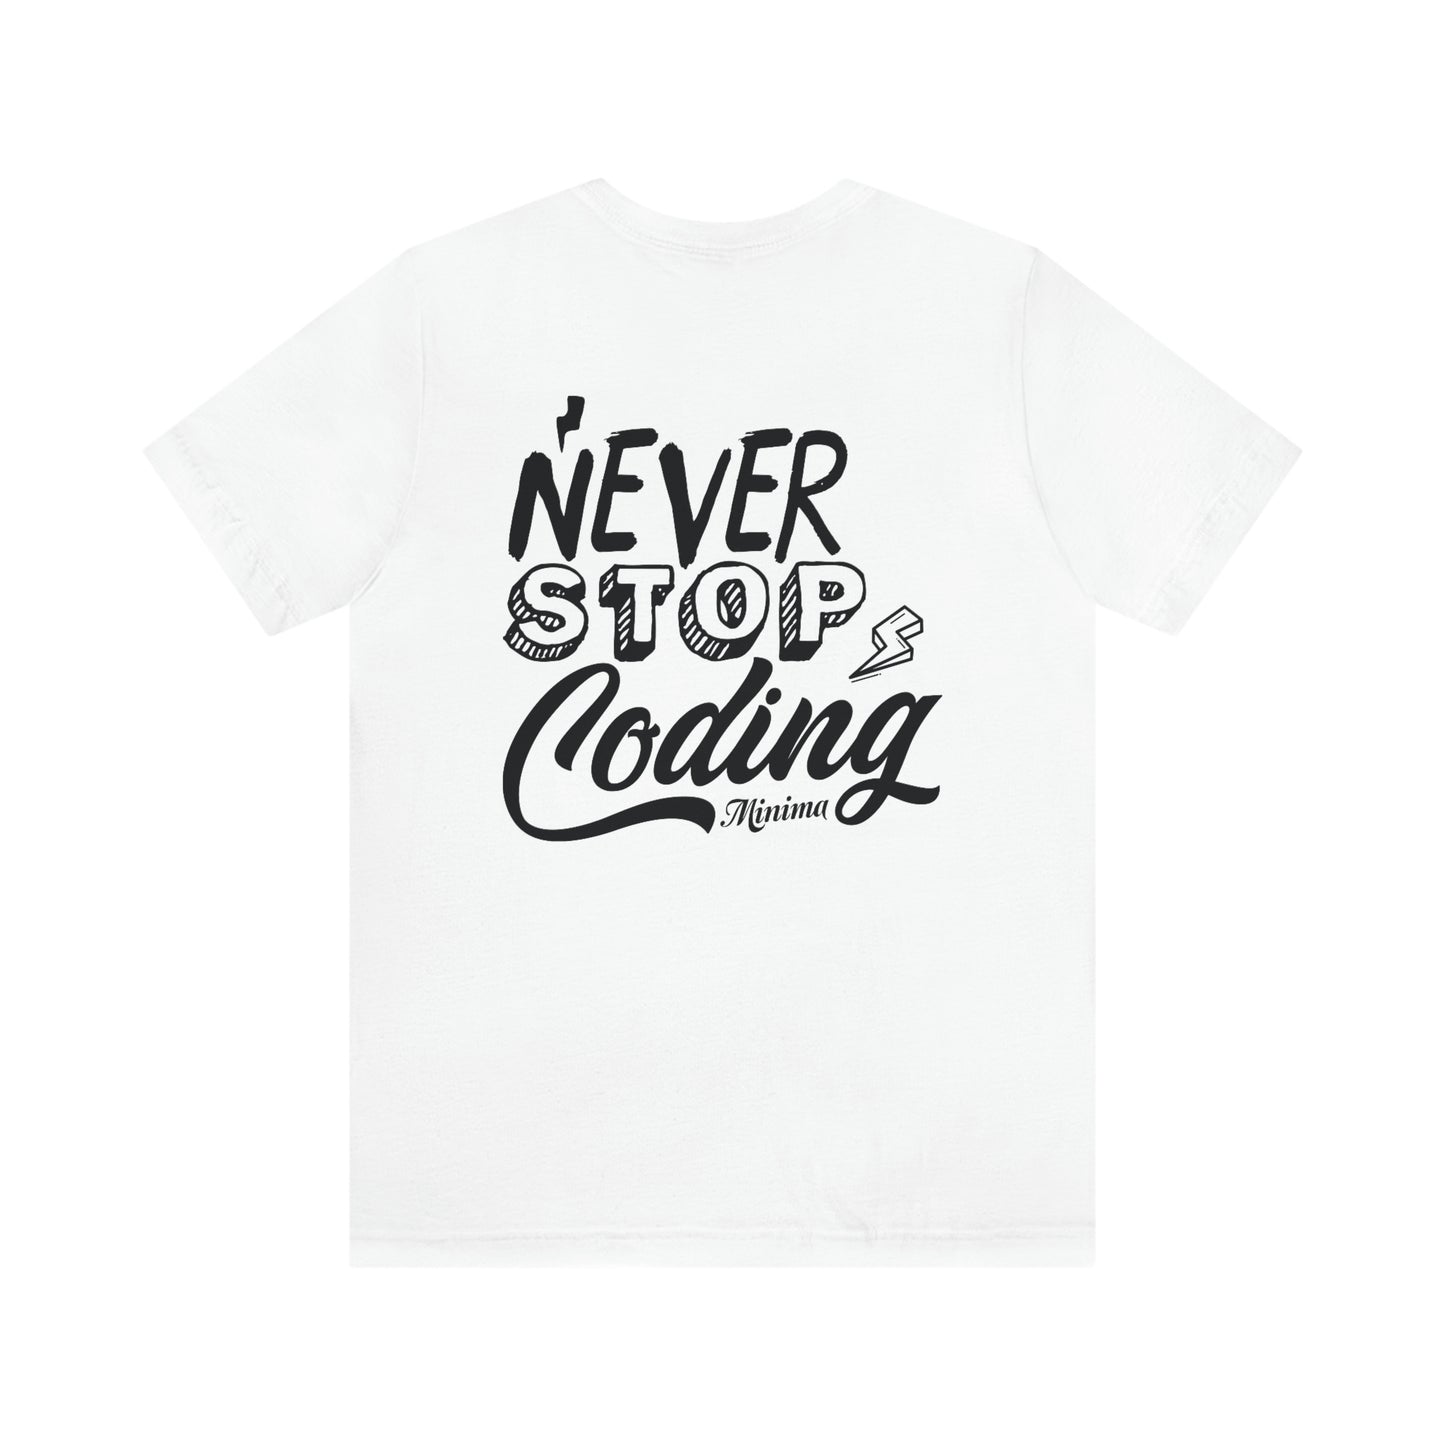 Never Stop Coding Tee